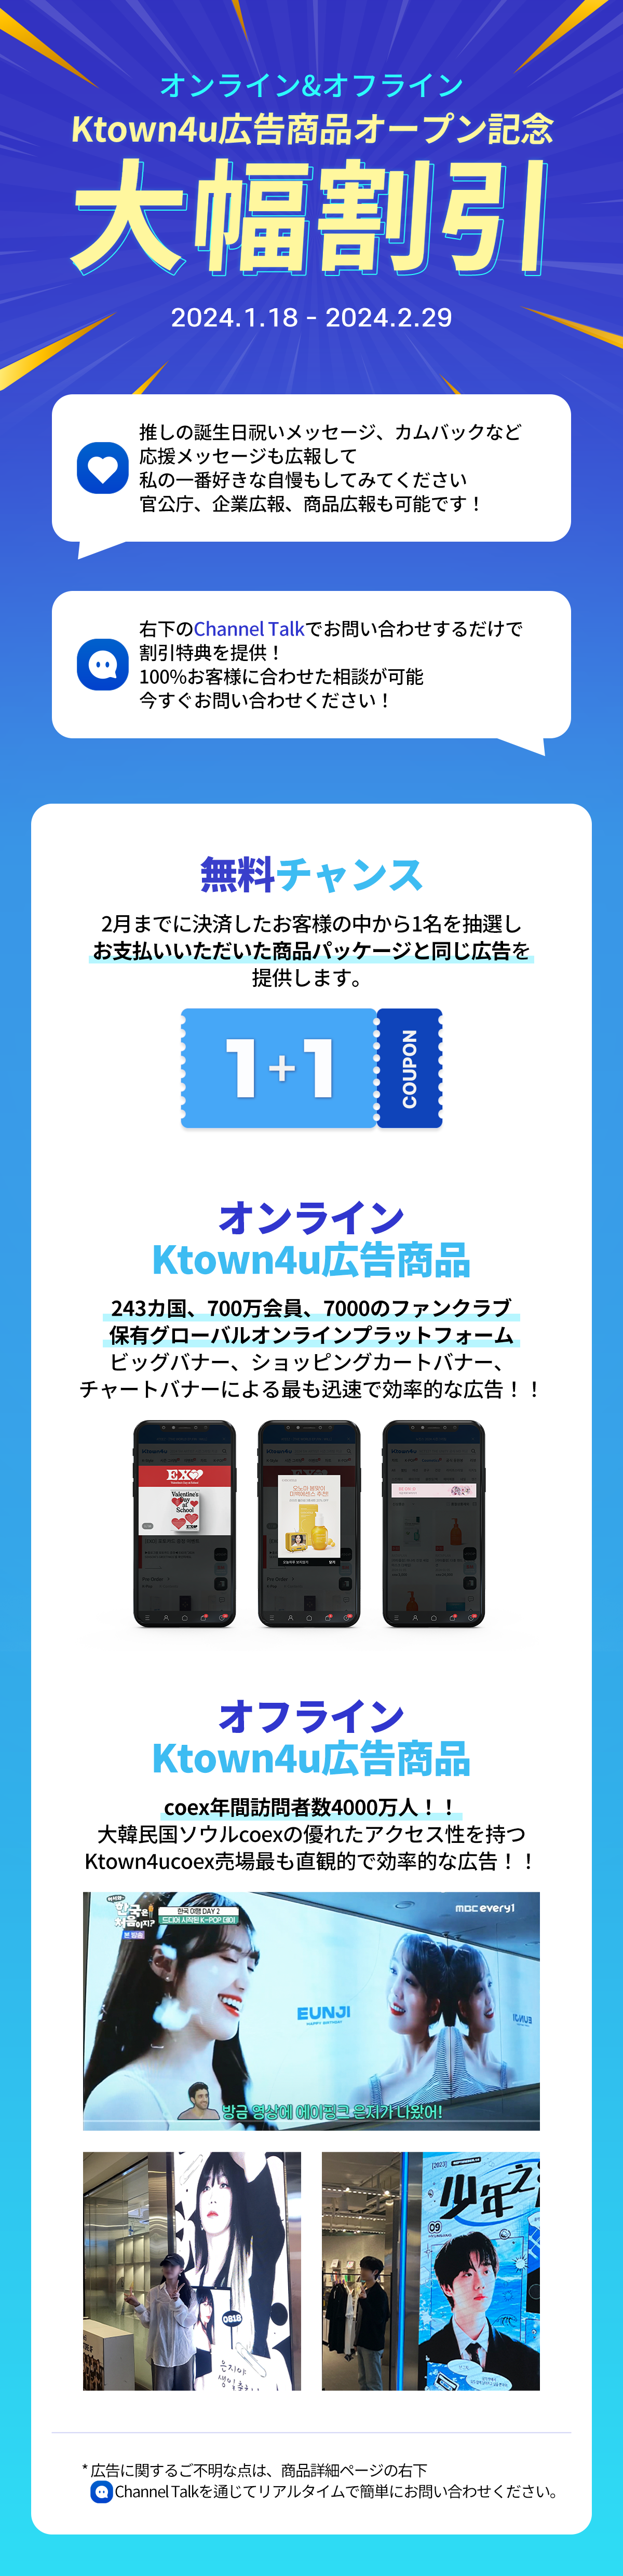 Ktown4u広告商品